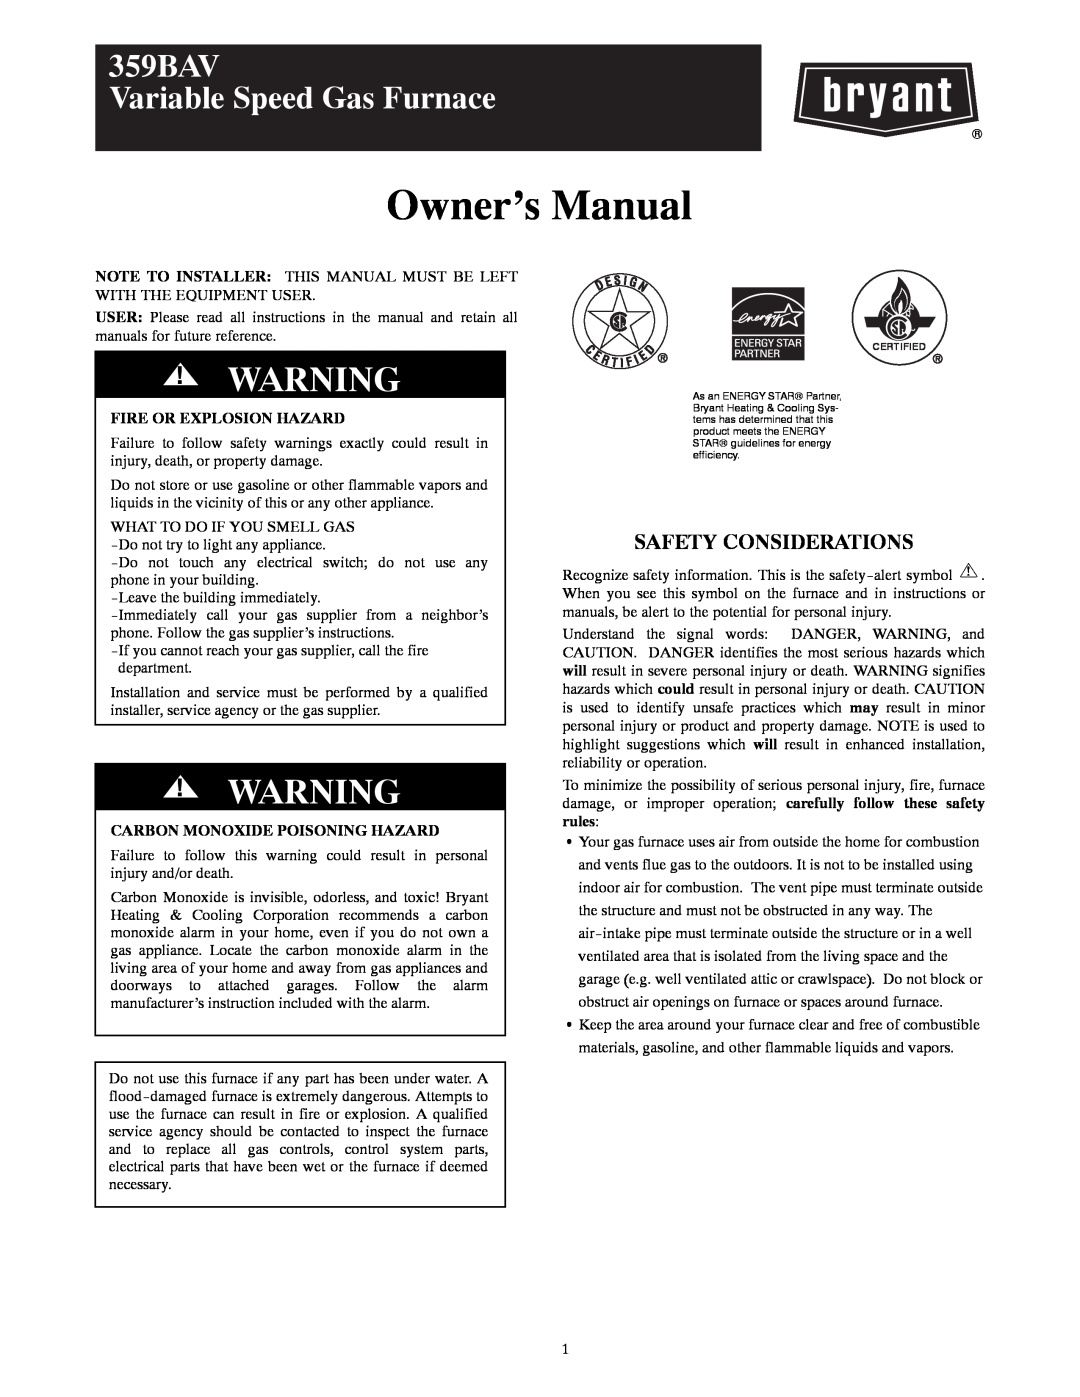 Bryant owner manual Fire Or Explosion Hazard, Carbon Monoxide Poisoning Hazard, 359BAV Variable Speed Gas Furnace 